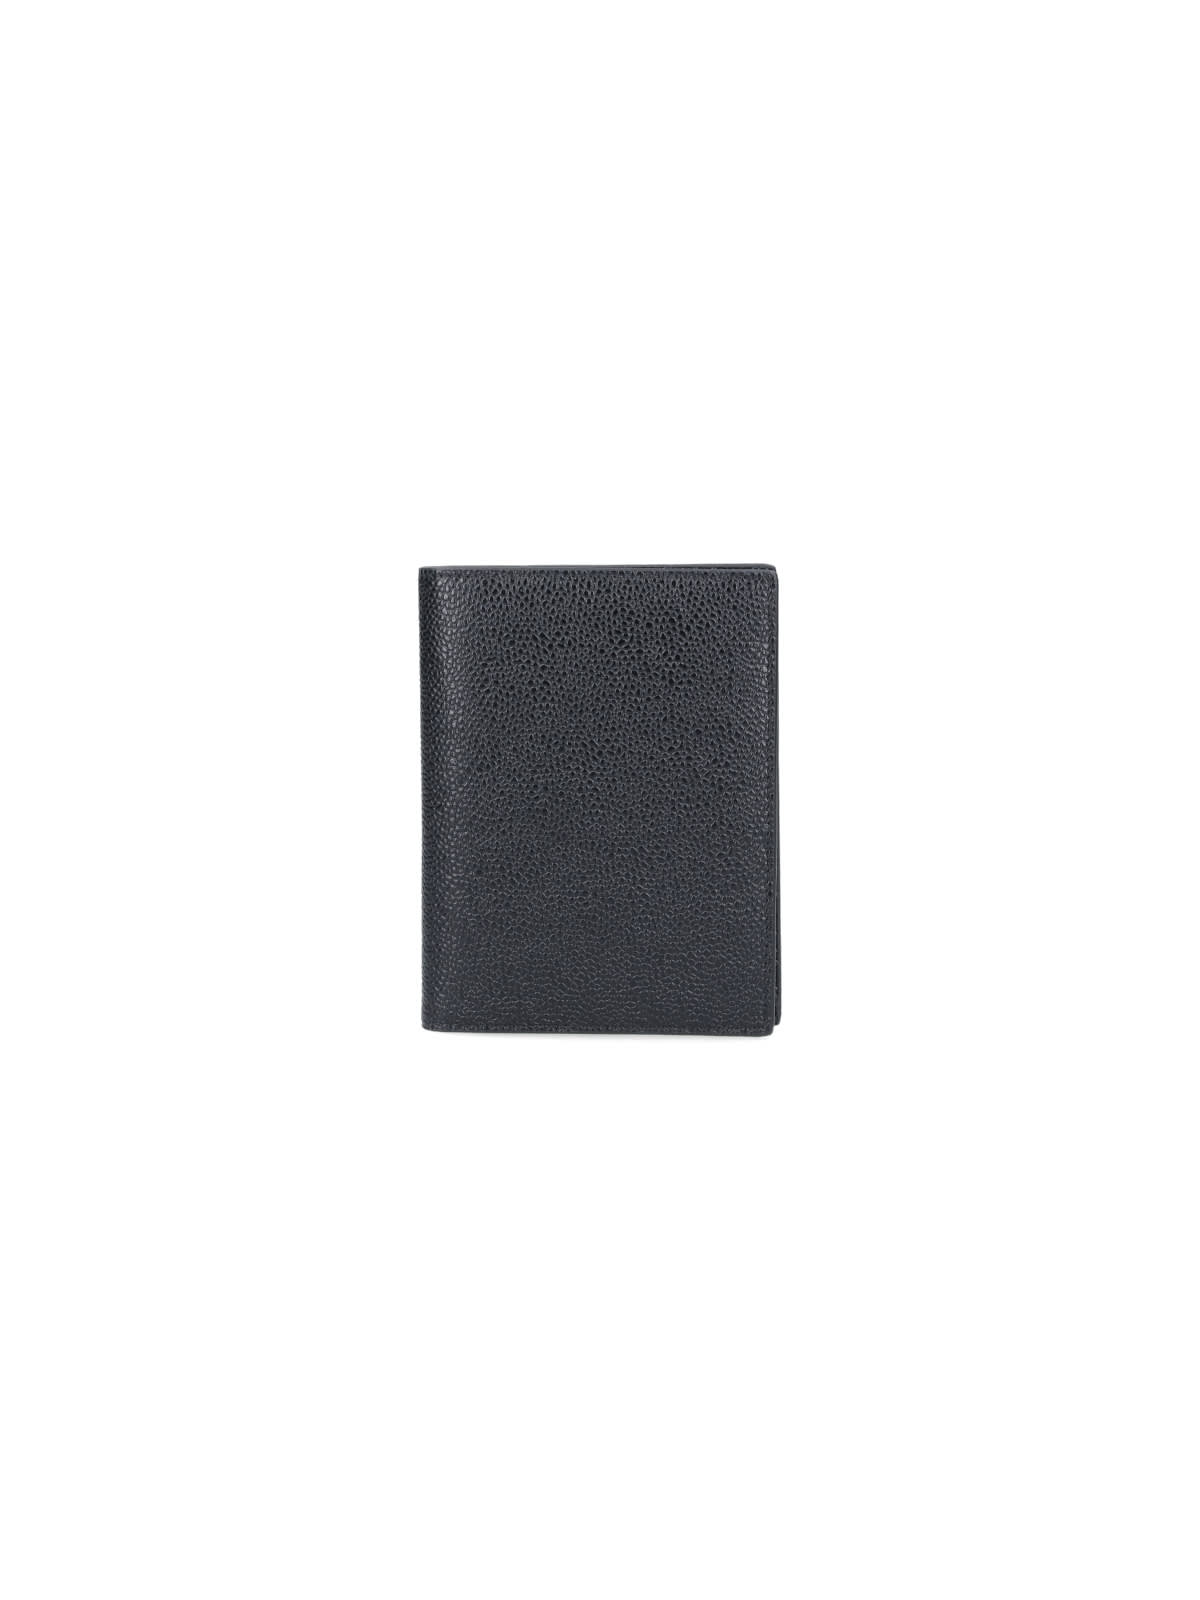 Shop Thom Browne Leather Passport Holder. In Black